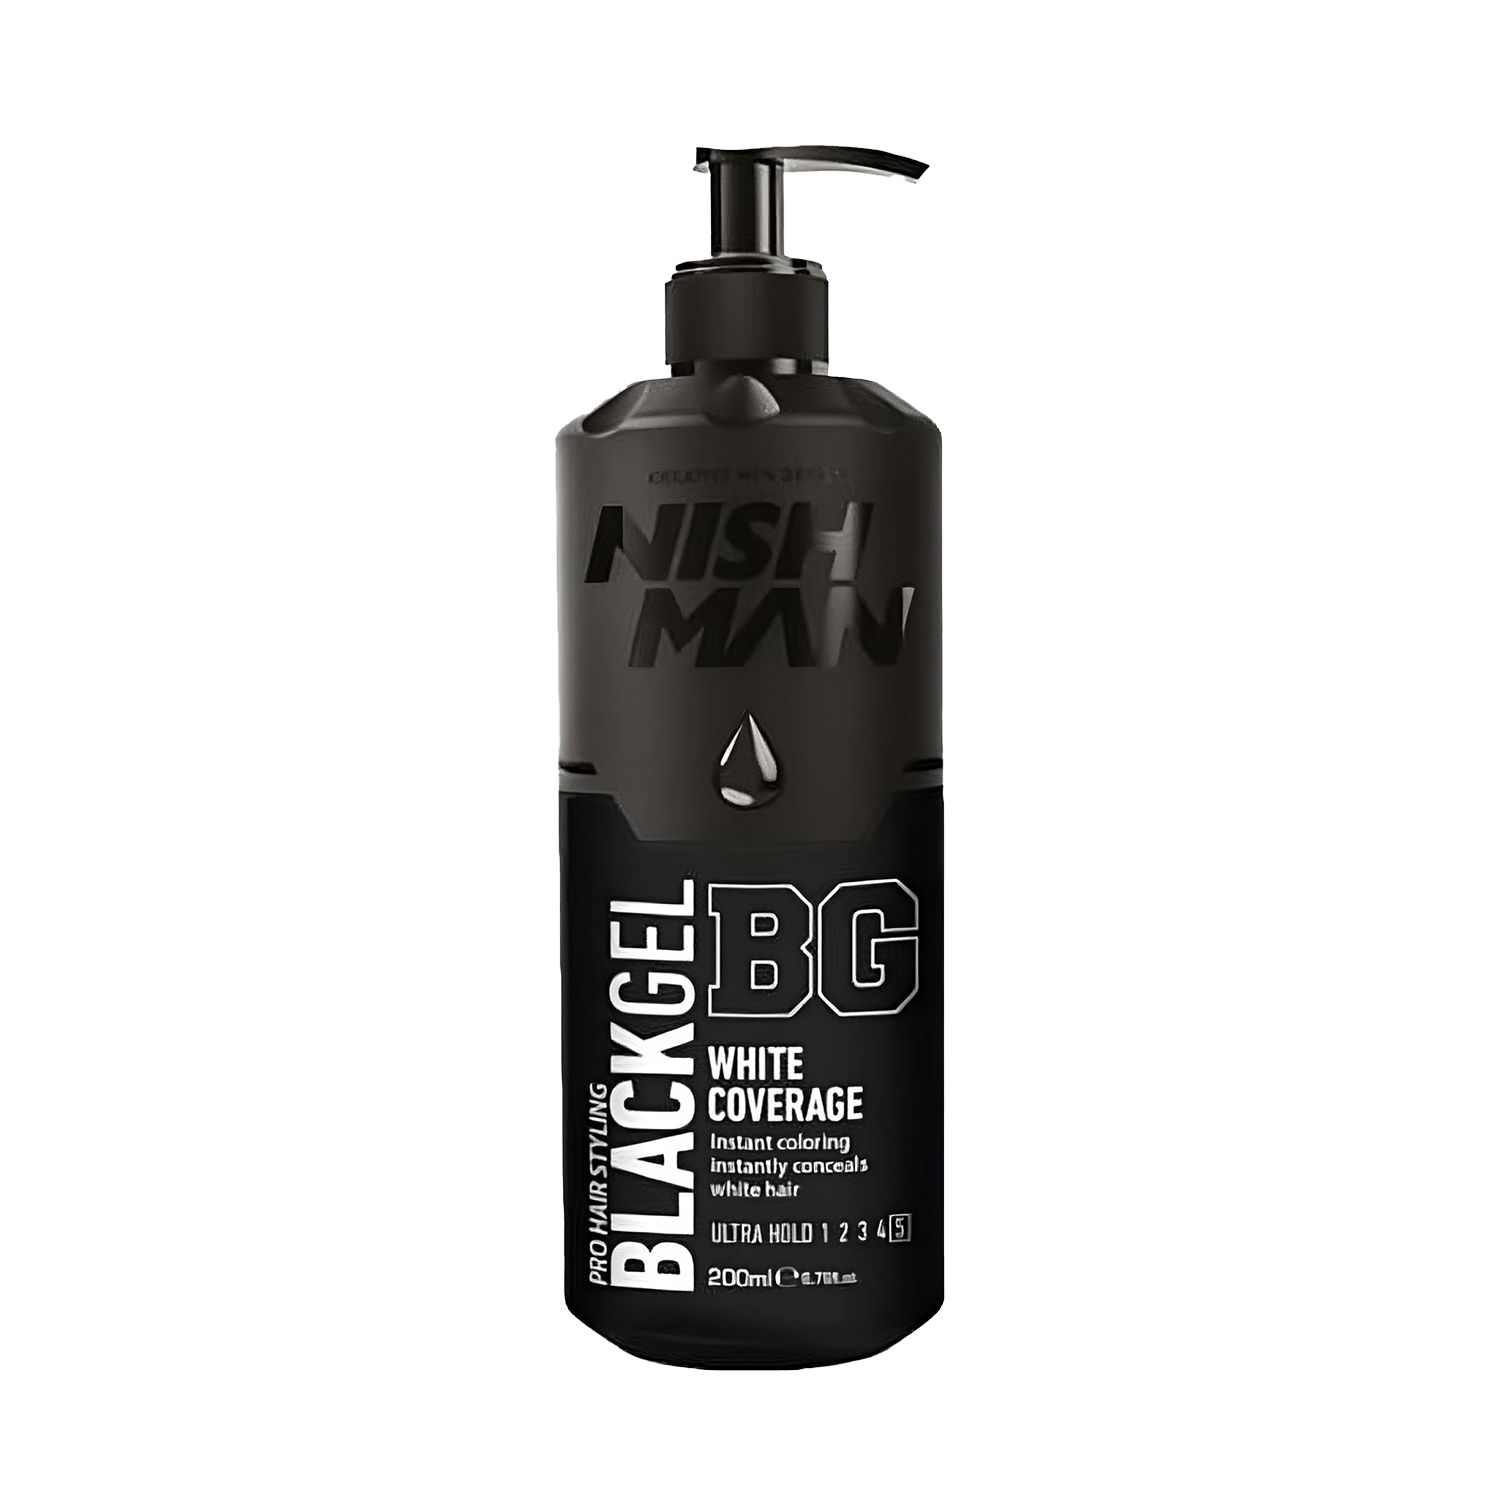 NISH MAN – Pro Hair Styling Black Gel – 200ml